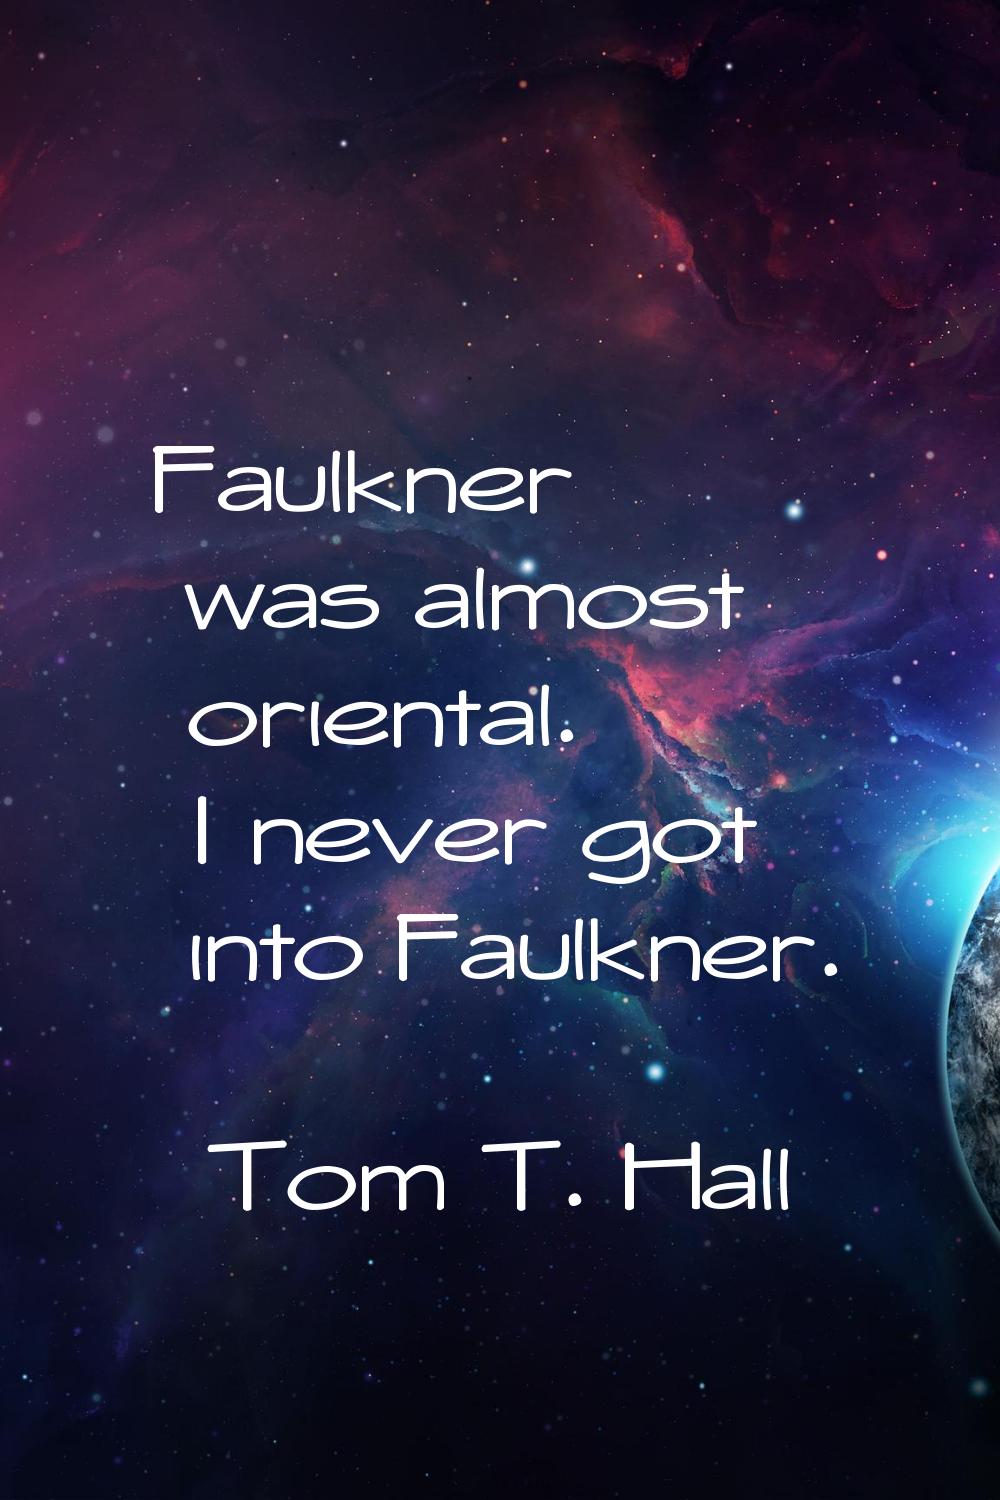 Faulkner was almost oriental. I never got into Faulkner.